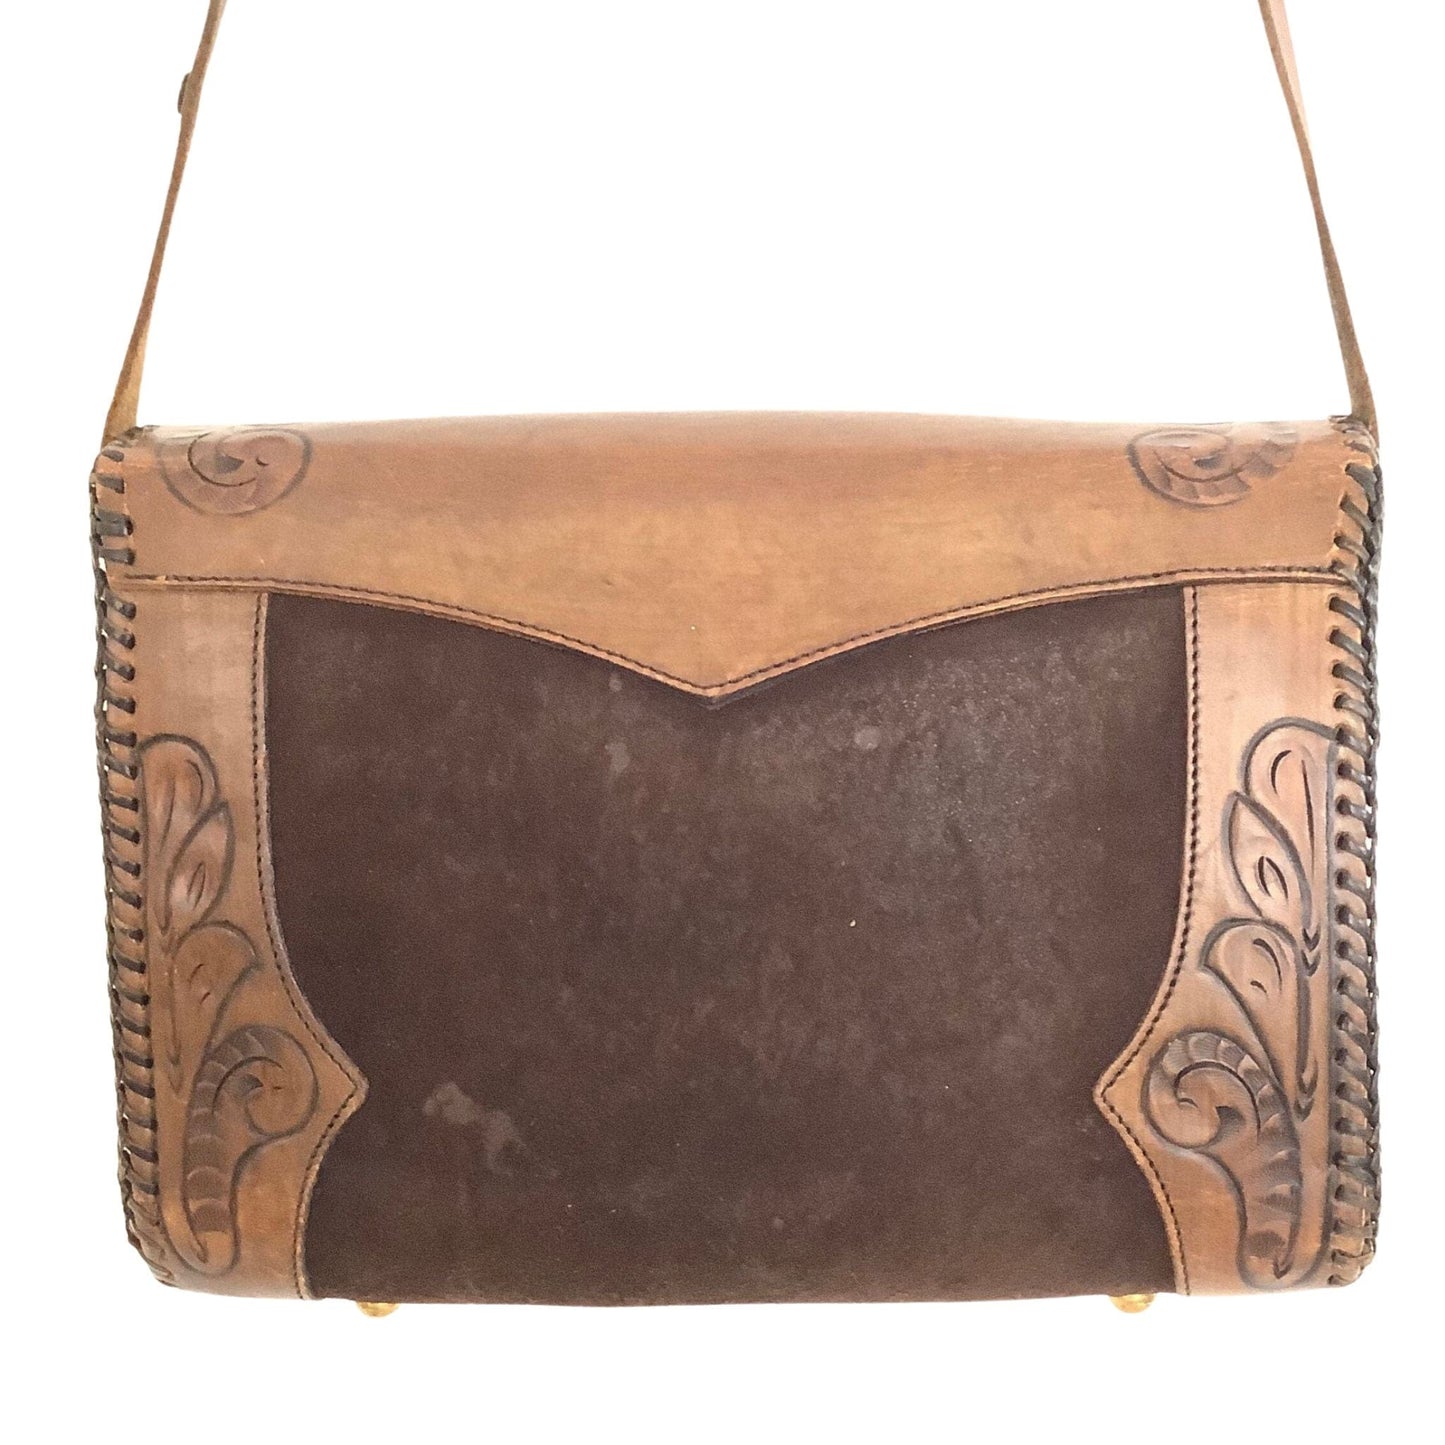 Joo Kay Tooled Bag Brown / Leather / Vintage 1950s